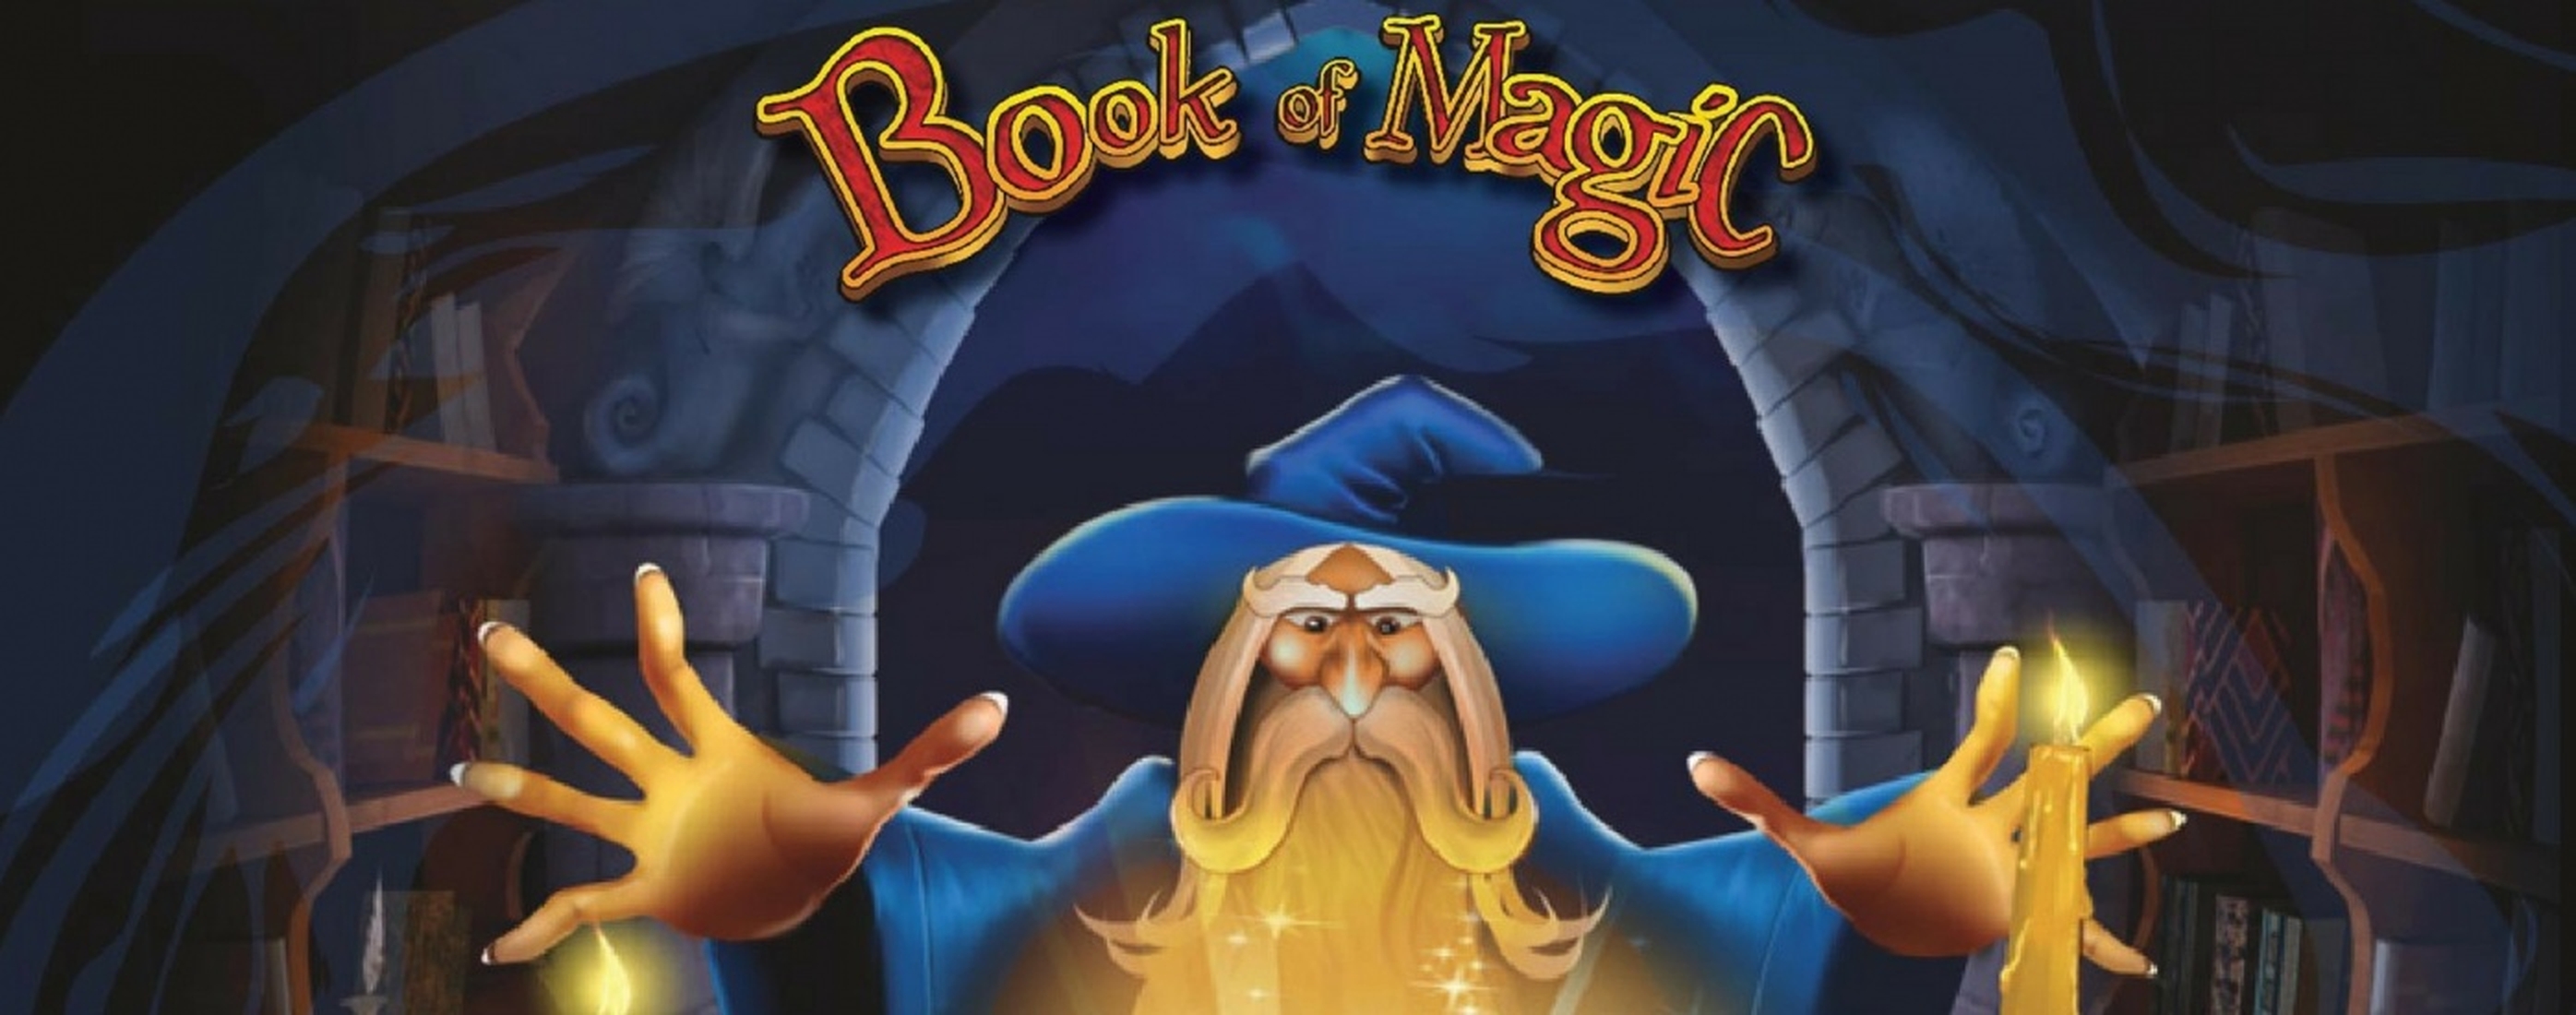 The Book of Magic Online Slot Demo Game by Wazdan